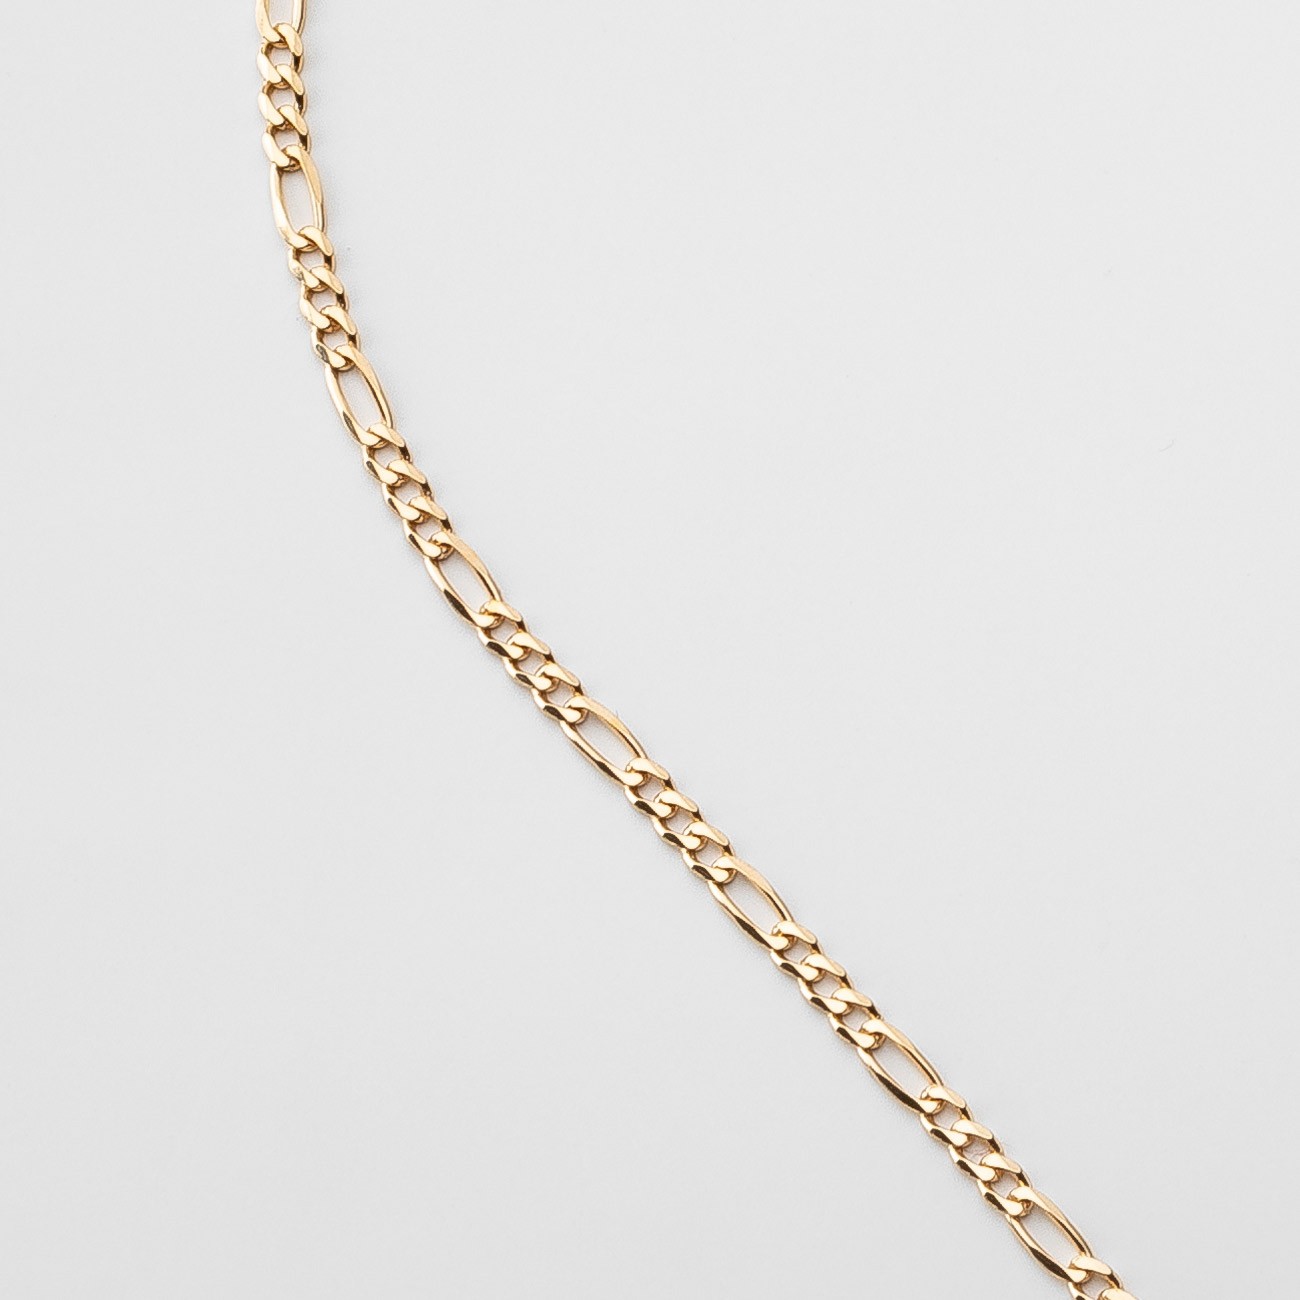 Rectangle pendant necklace figaro chain 925